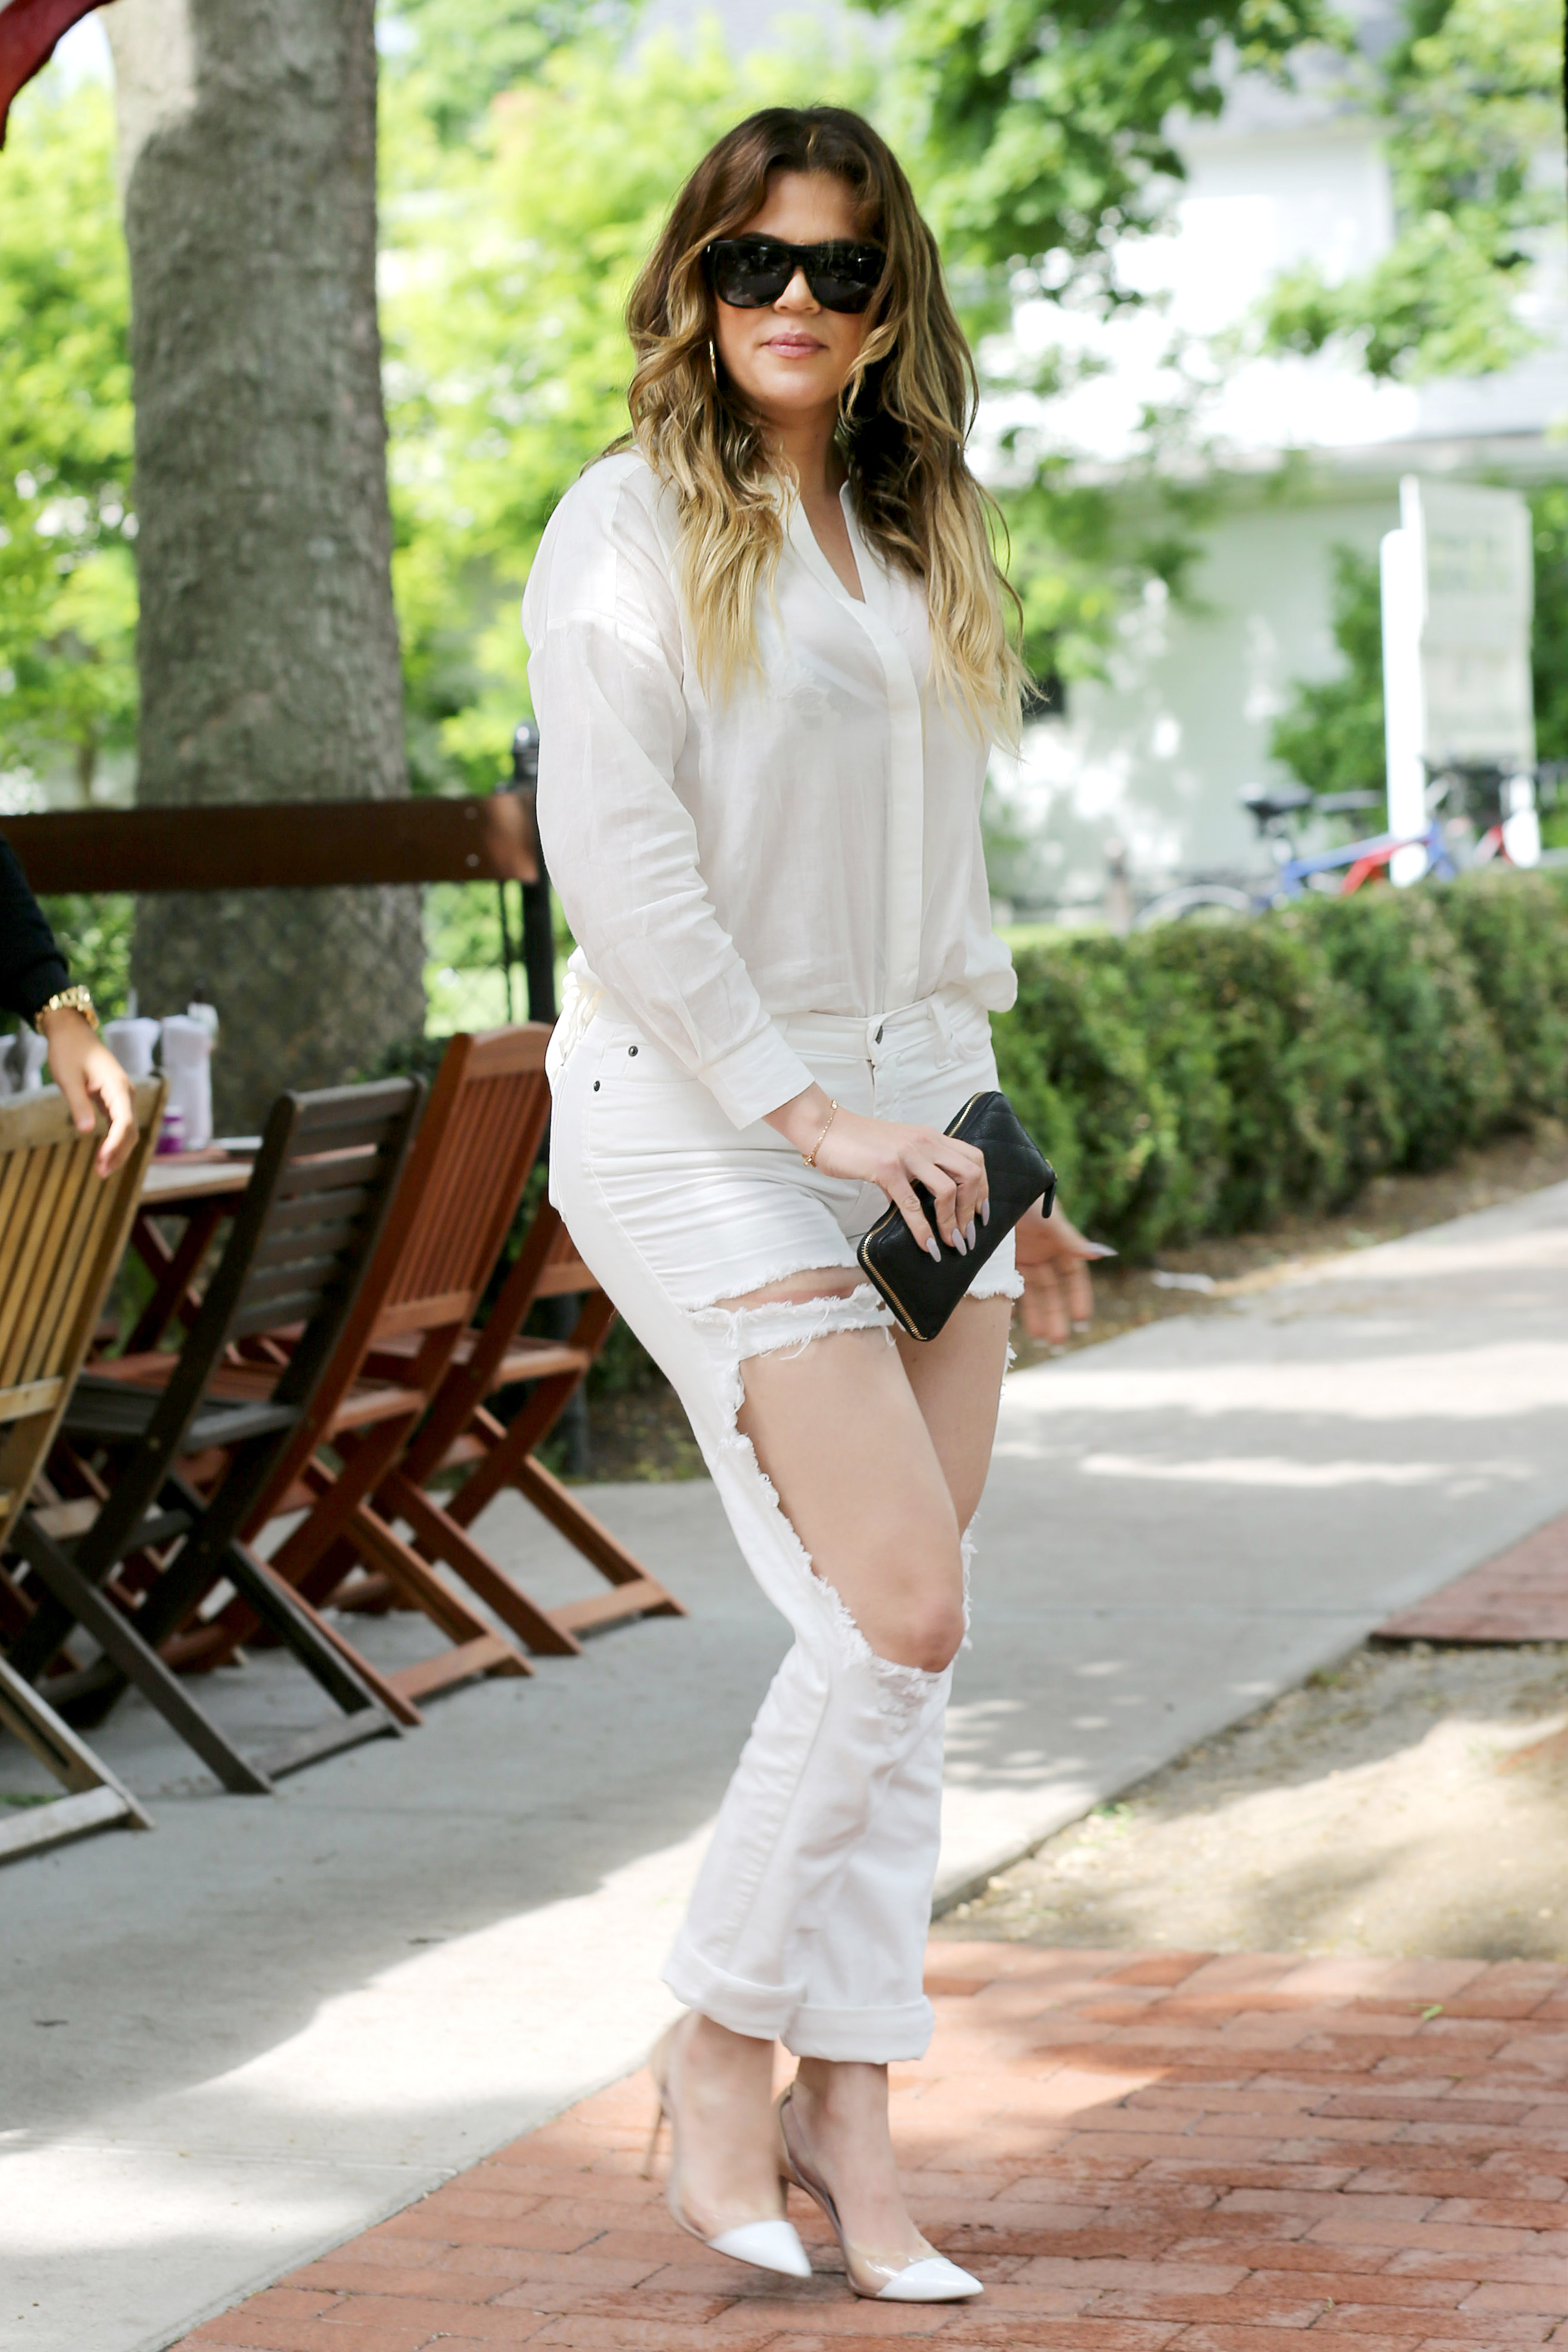 Khloe Kardashian in White Jeans in The Hamptons (1)